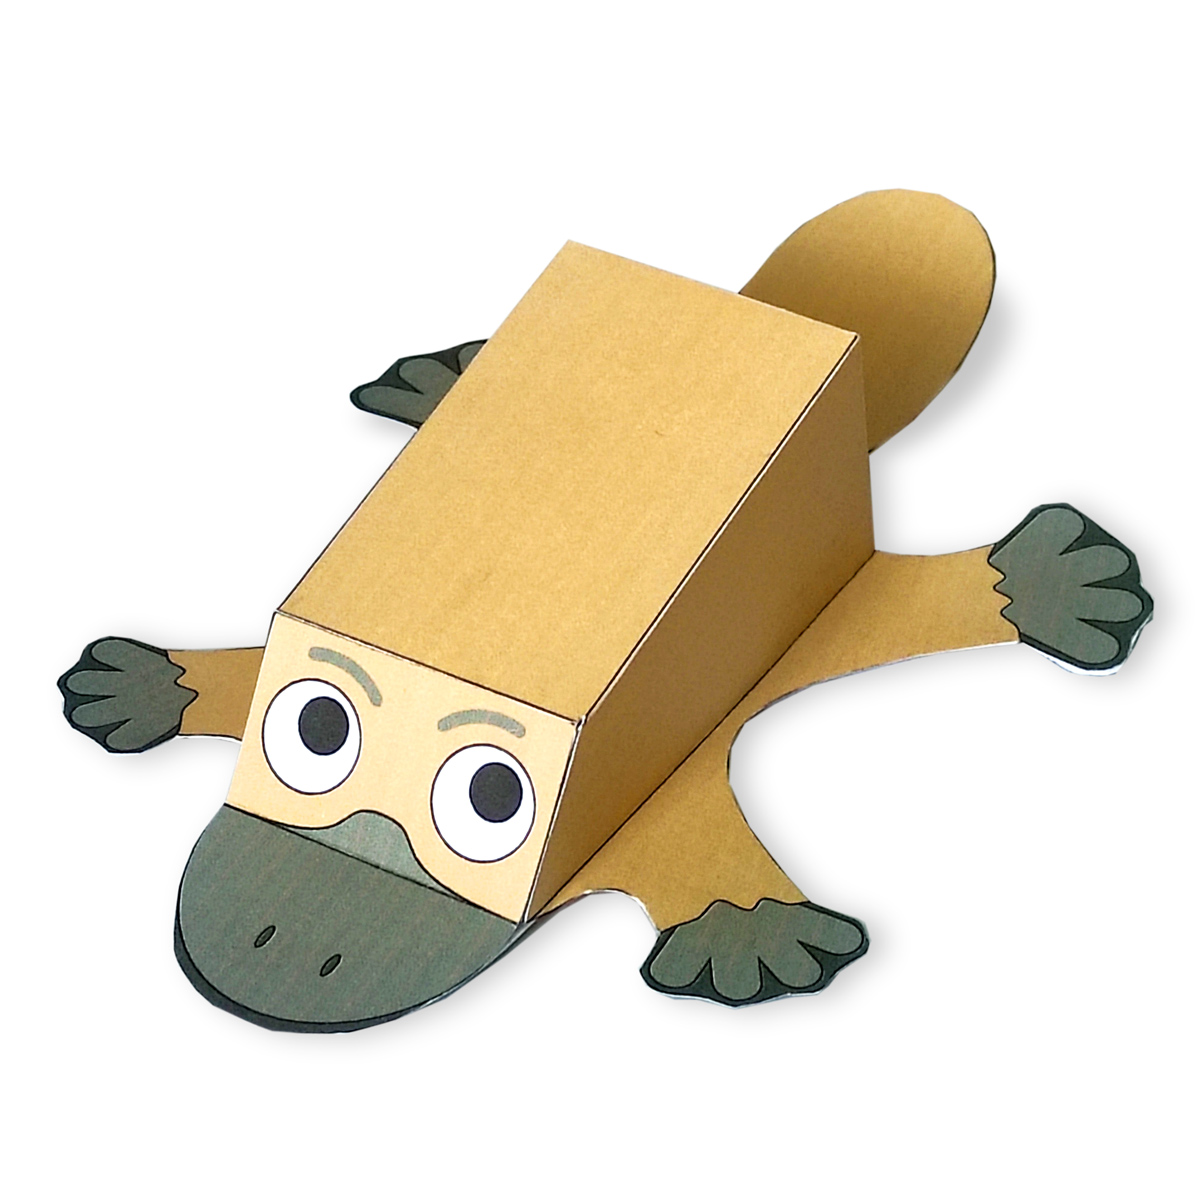 Platypus paper model